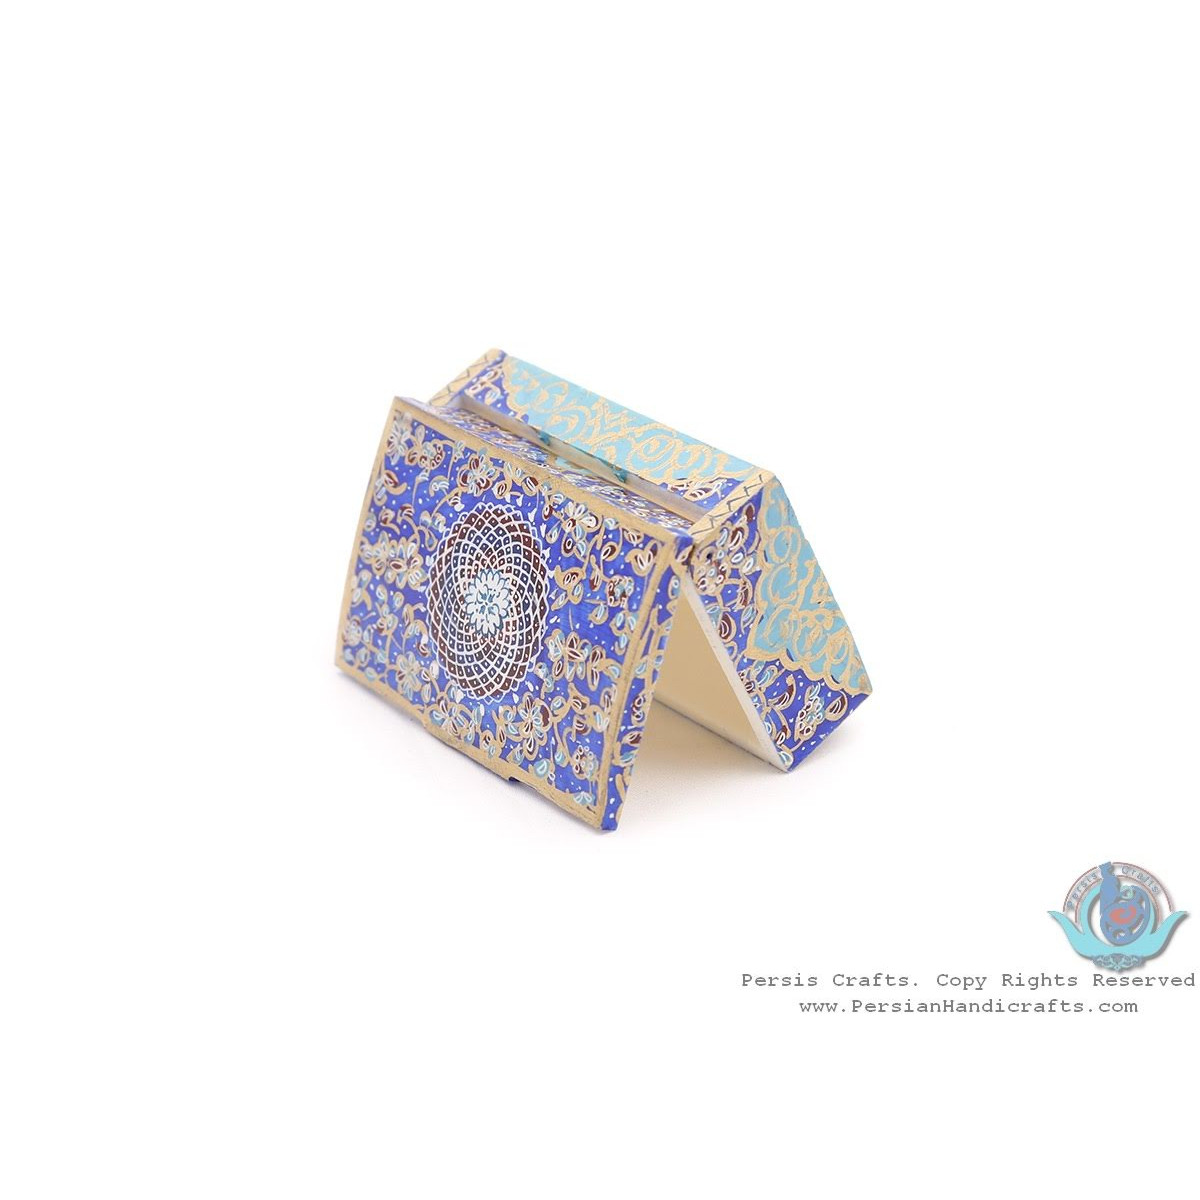 Common Miniature Chest Shape Jewelry Box - HM3916-Persian Handicrafts